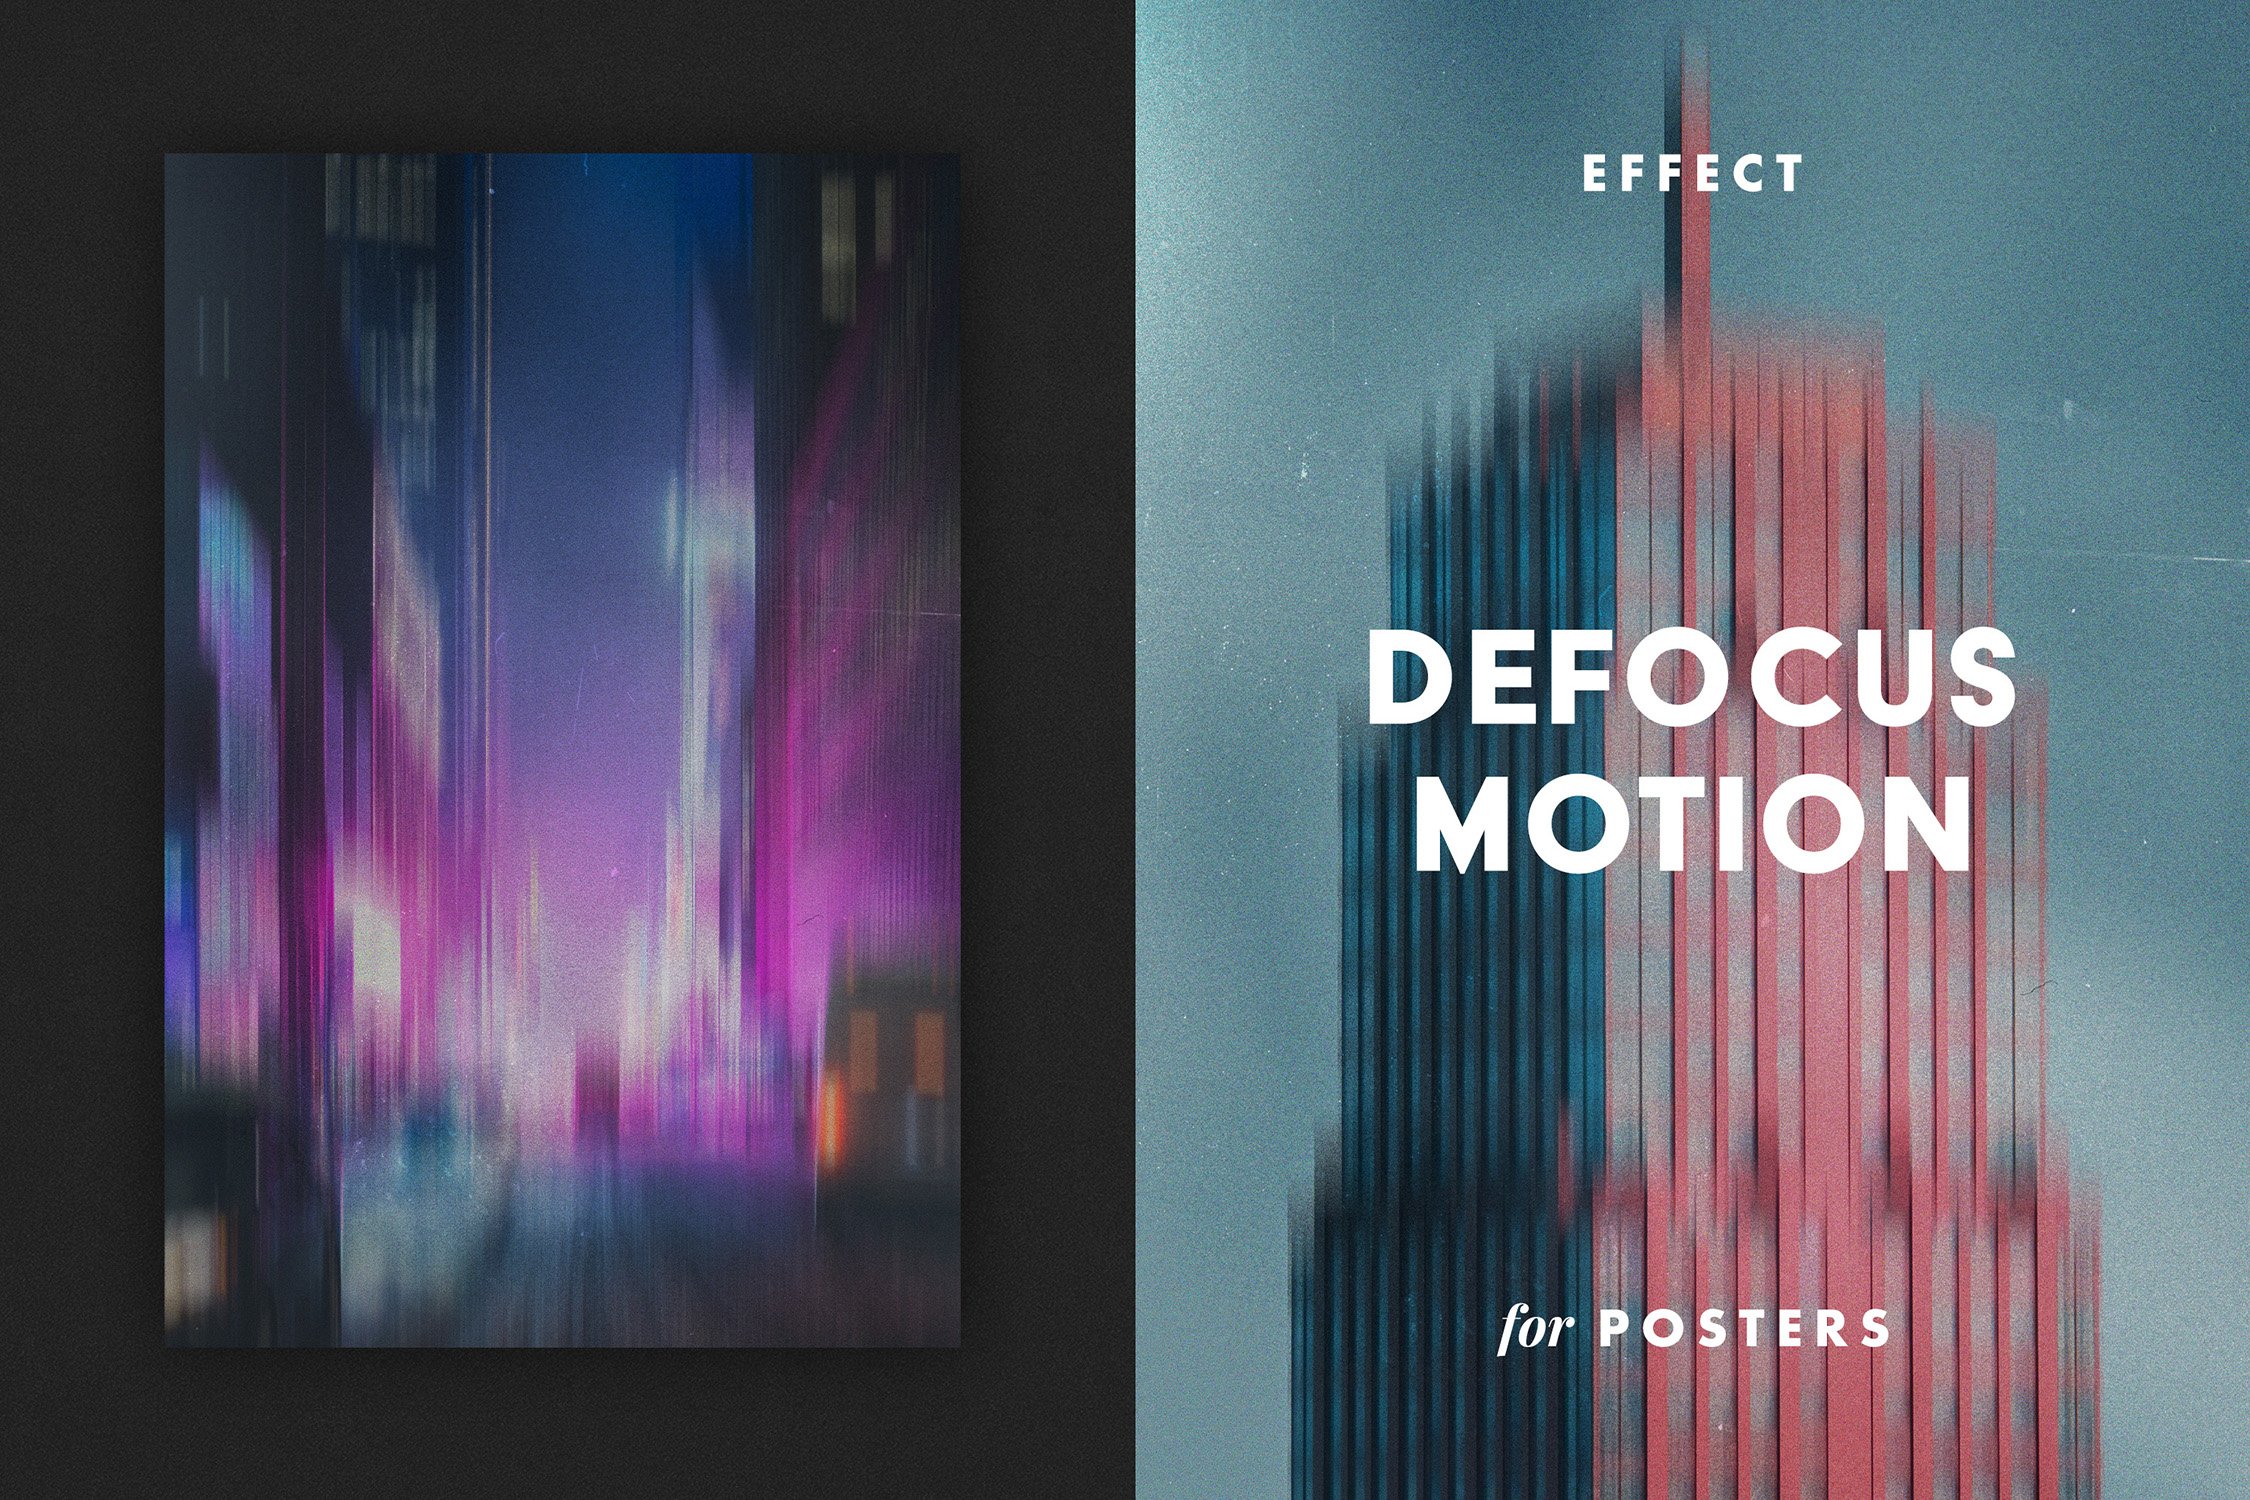 Defocus Motion Effect for Posterscover image.